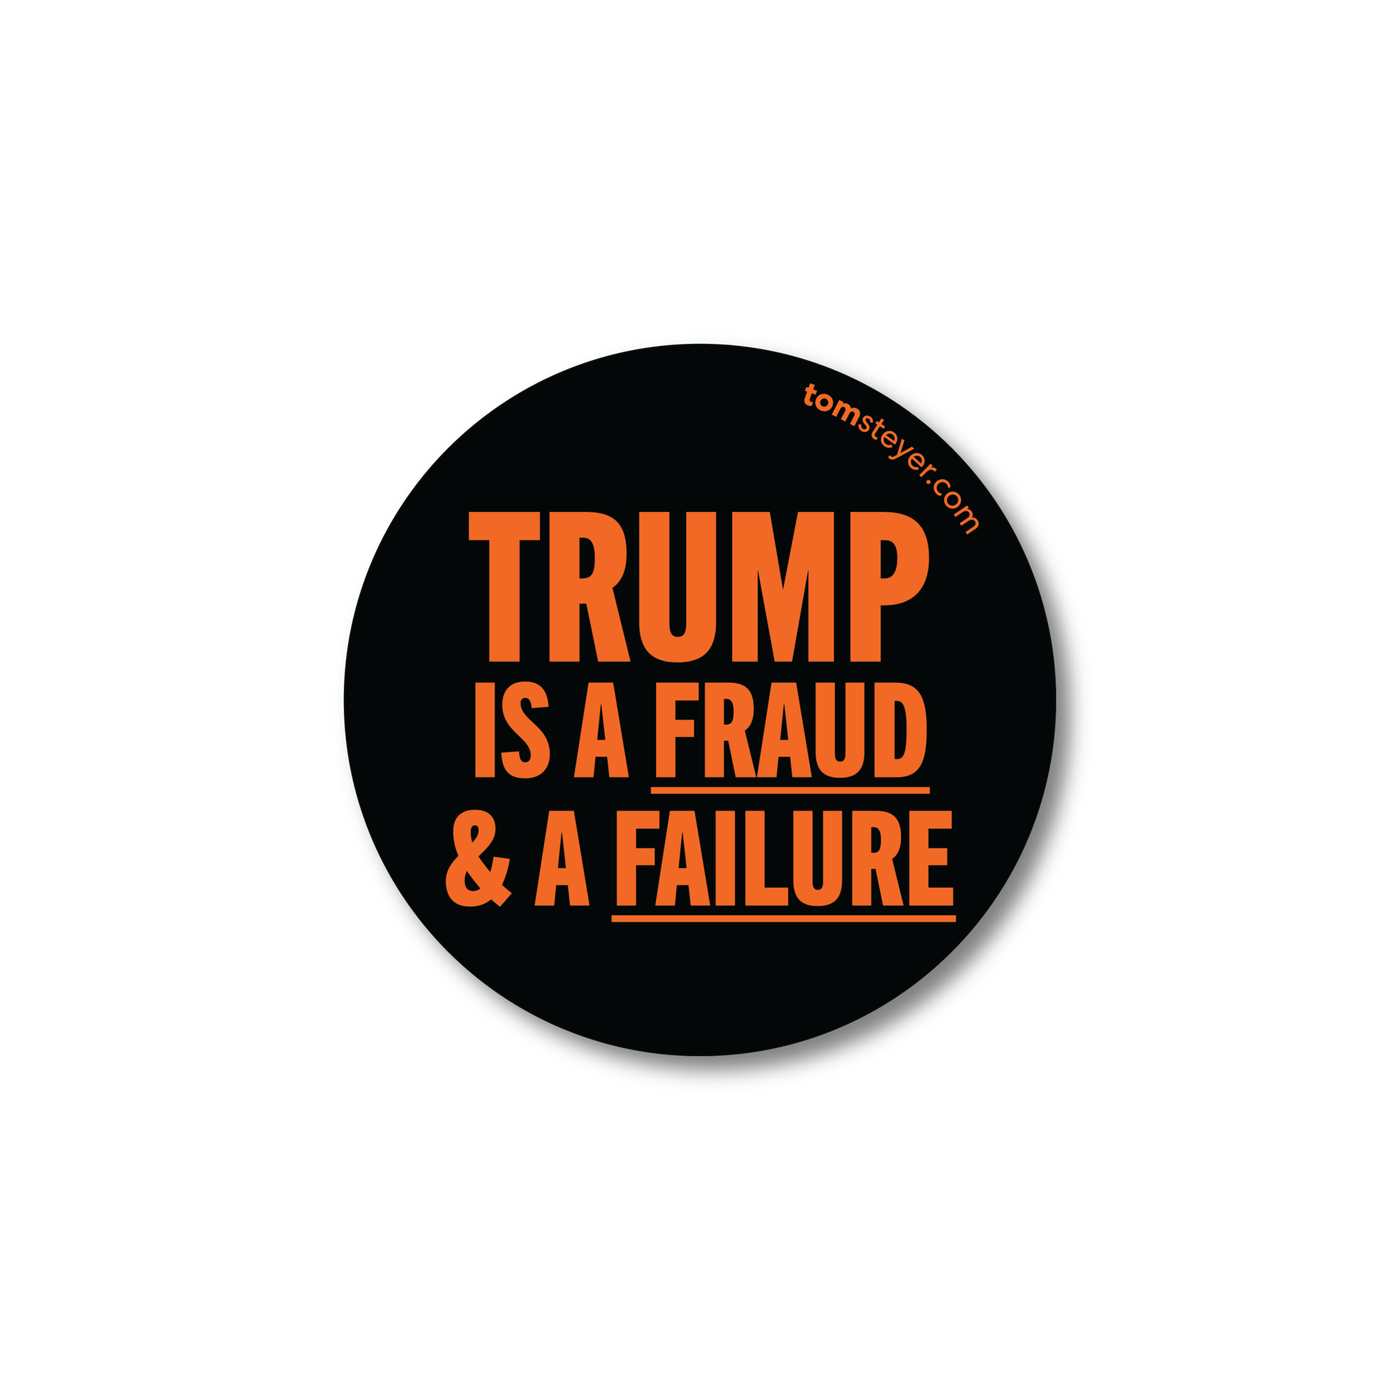 No Joe Biden 2020 Bumper Sticker Trump Bernie USA Presidential Campaign Politics